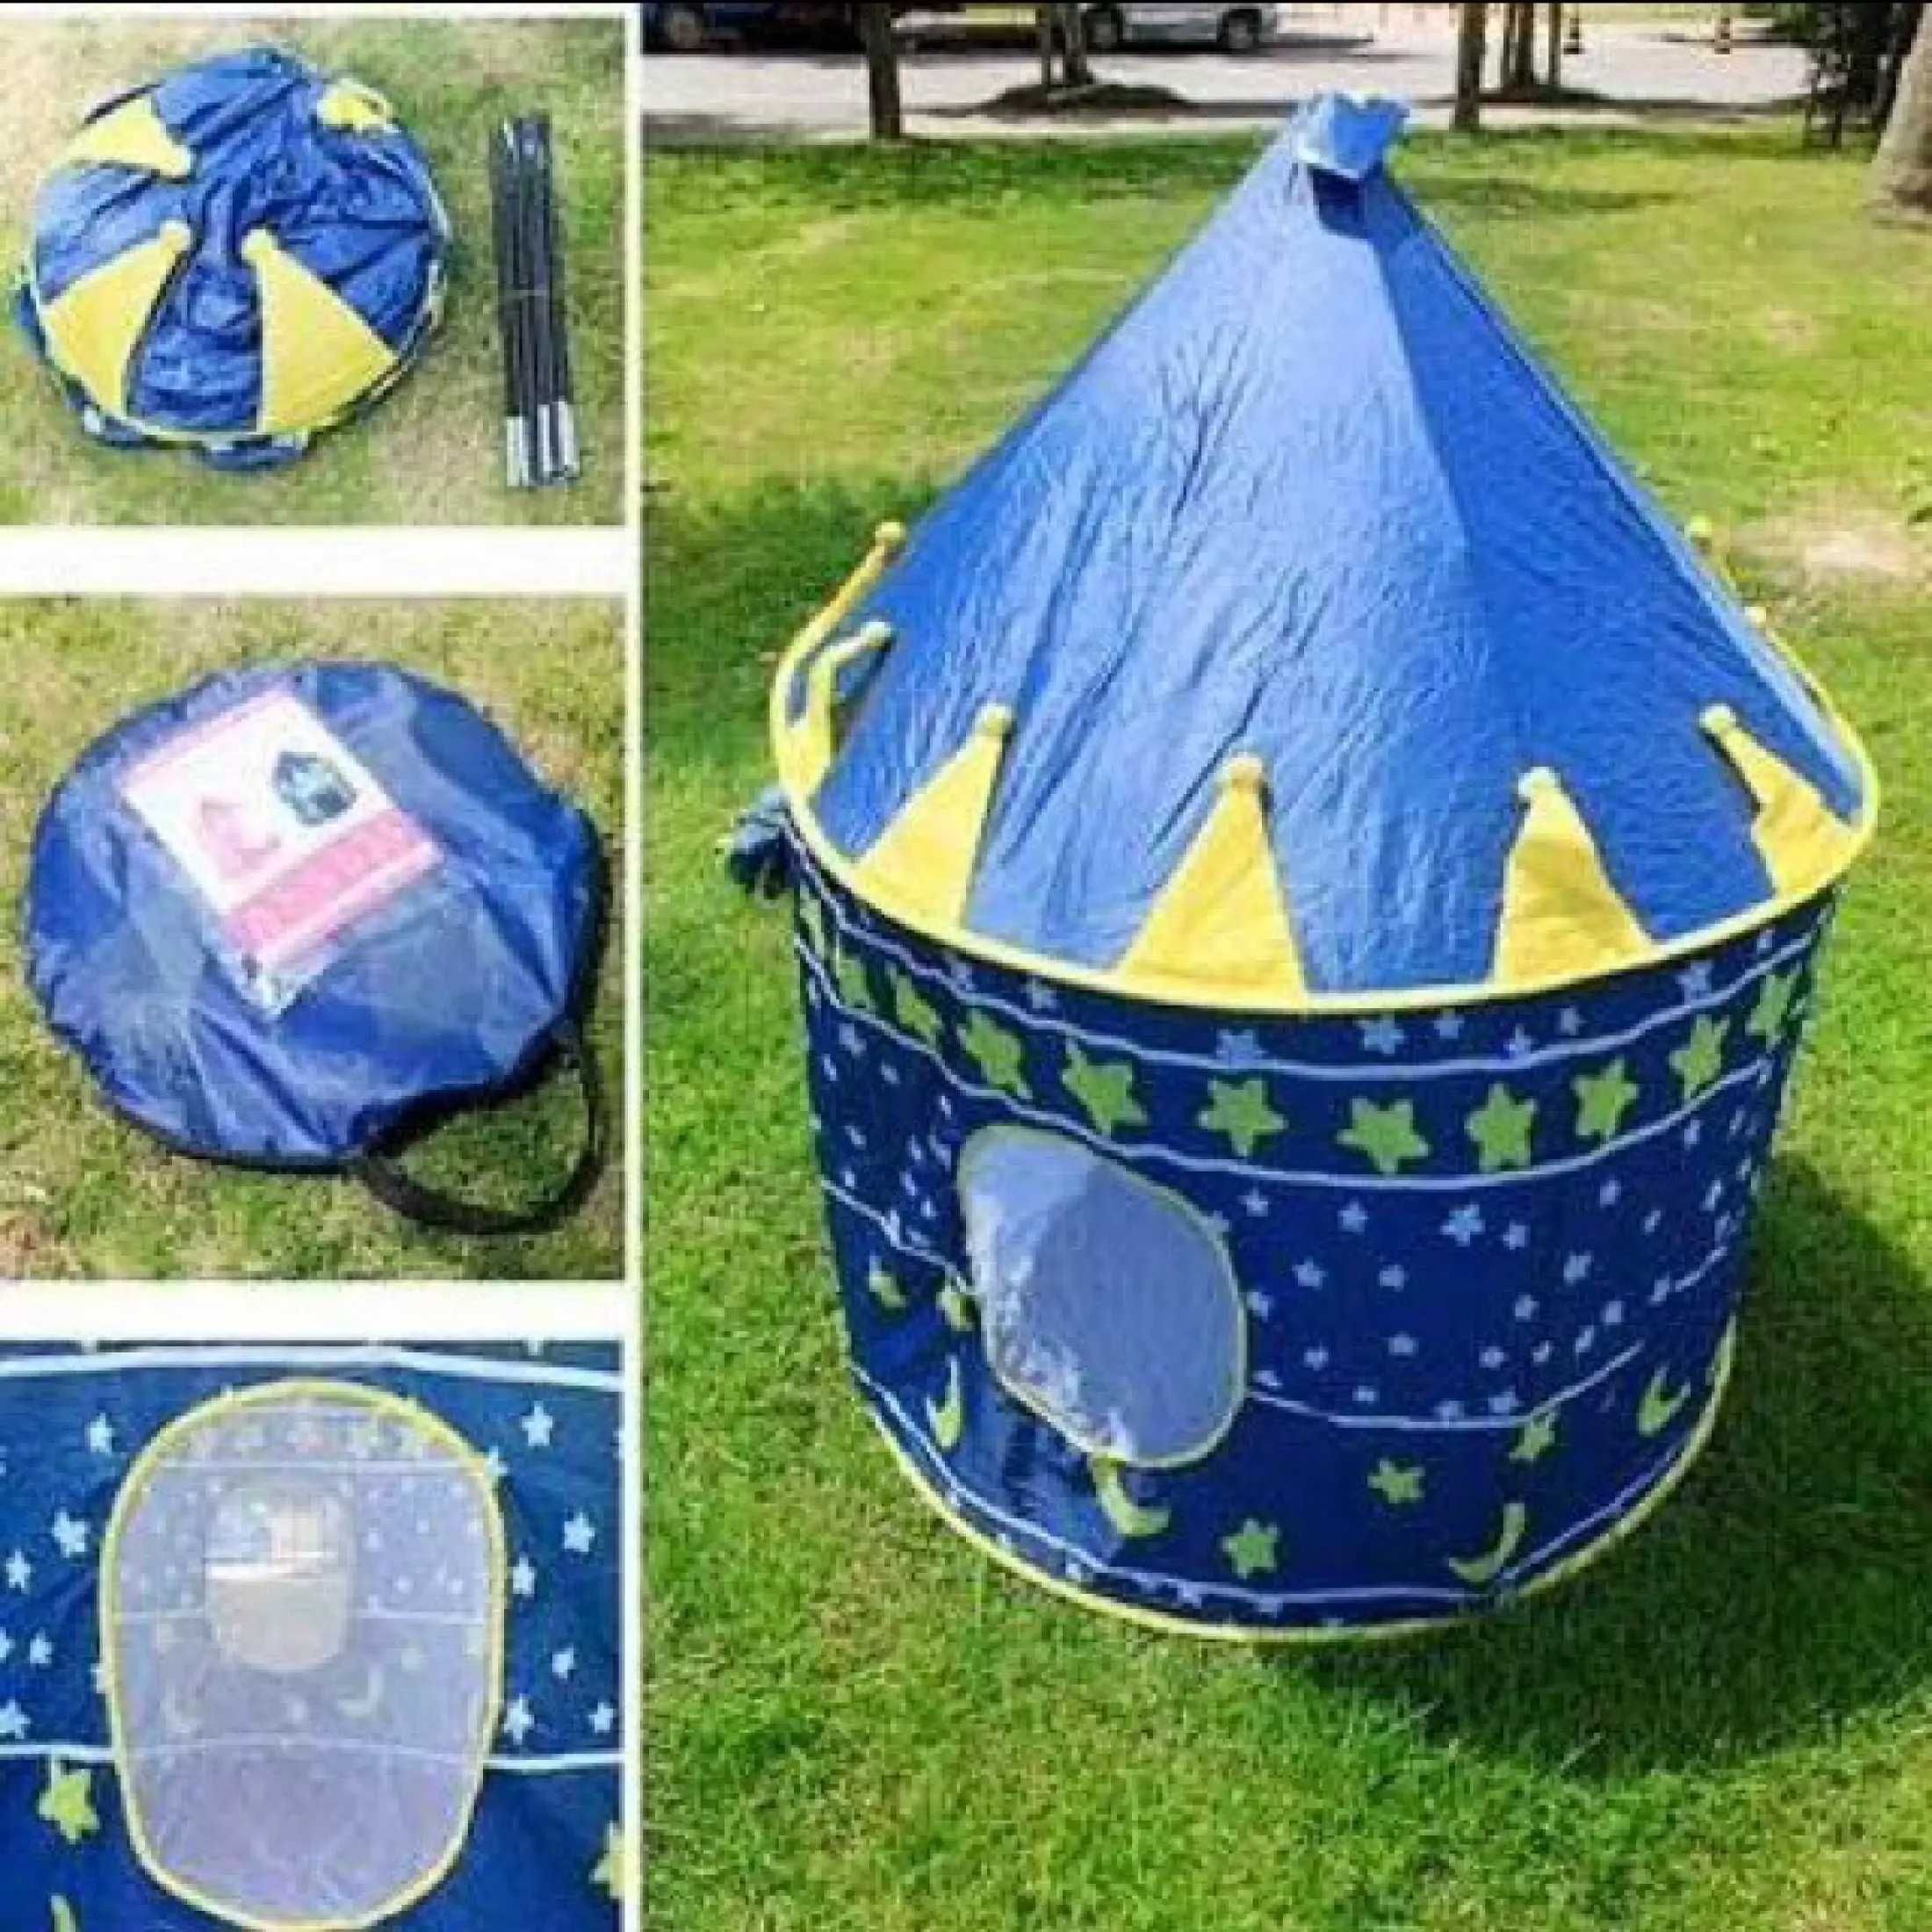 Детска преносима палатка замък за игра - къщичка синя 135х105 см